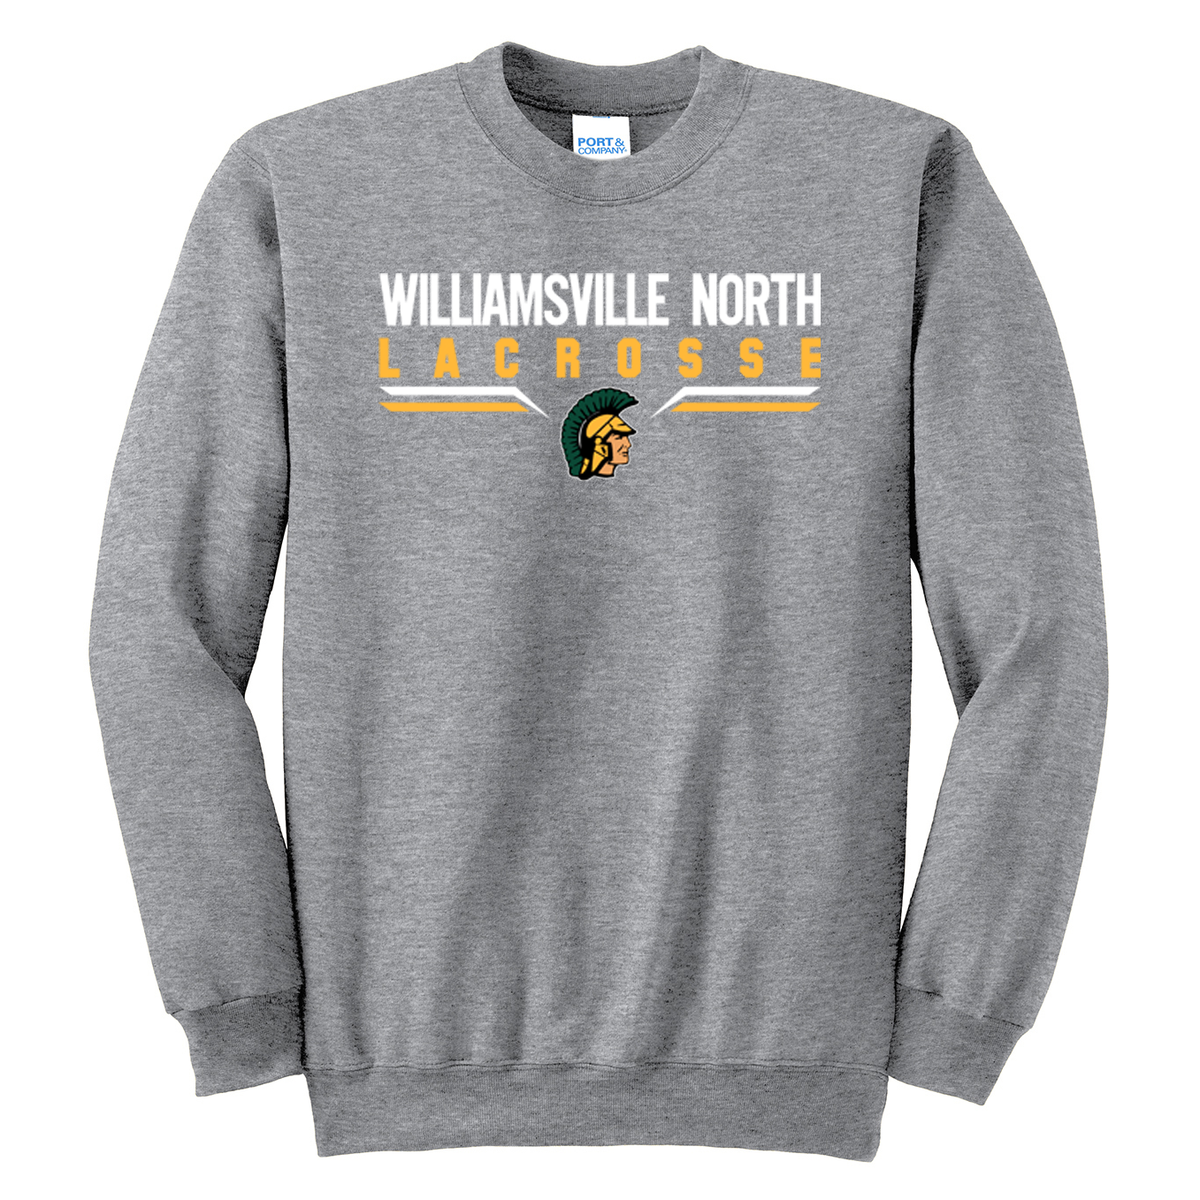 Williamsville North Lacrosse Crew Neck Sweater